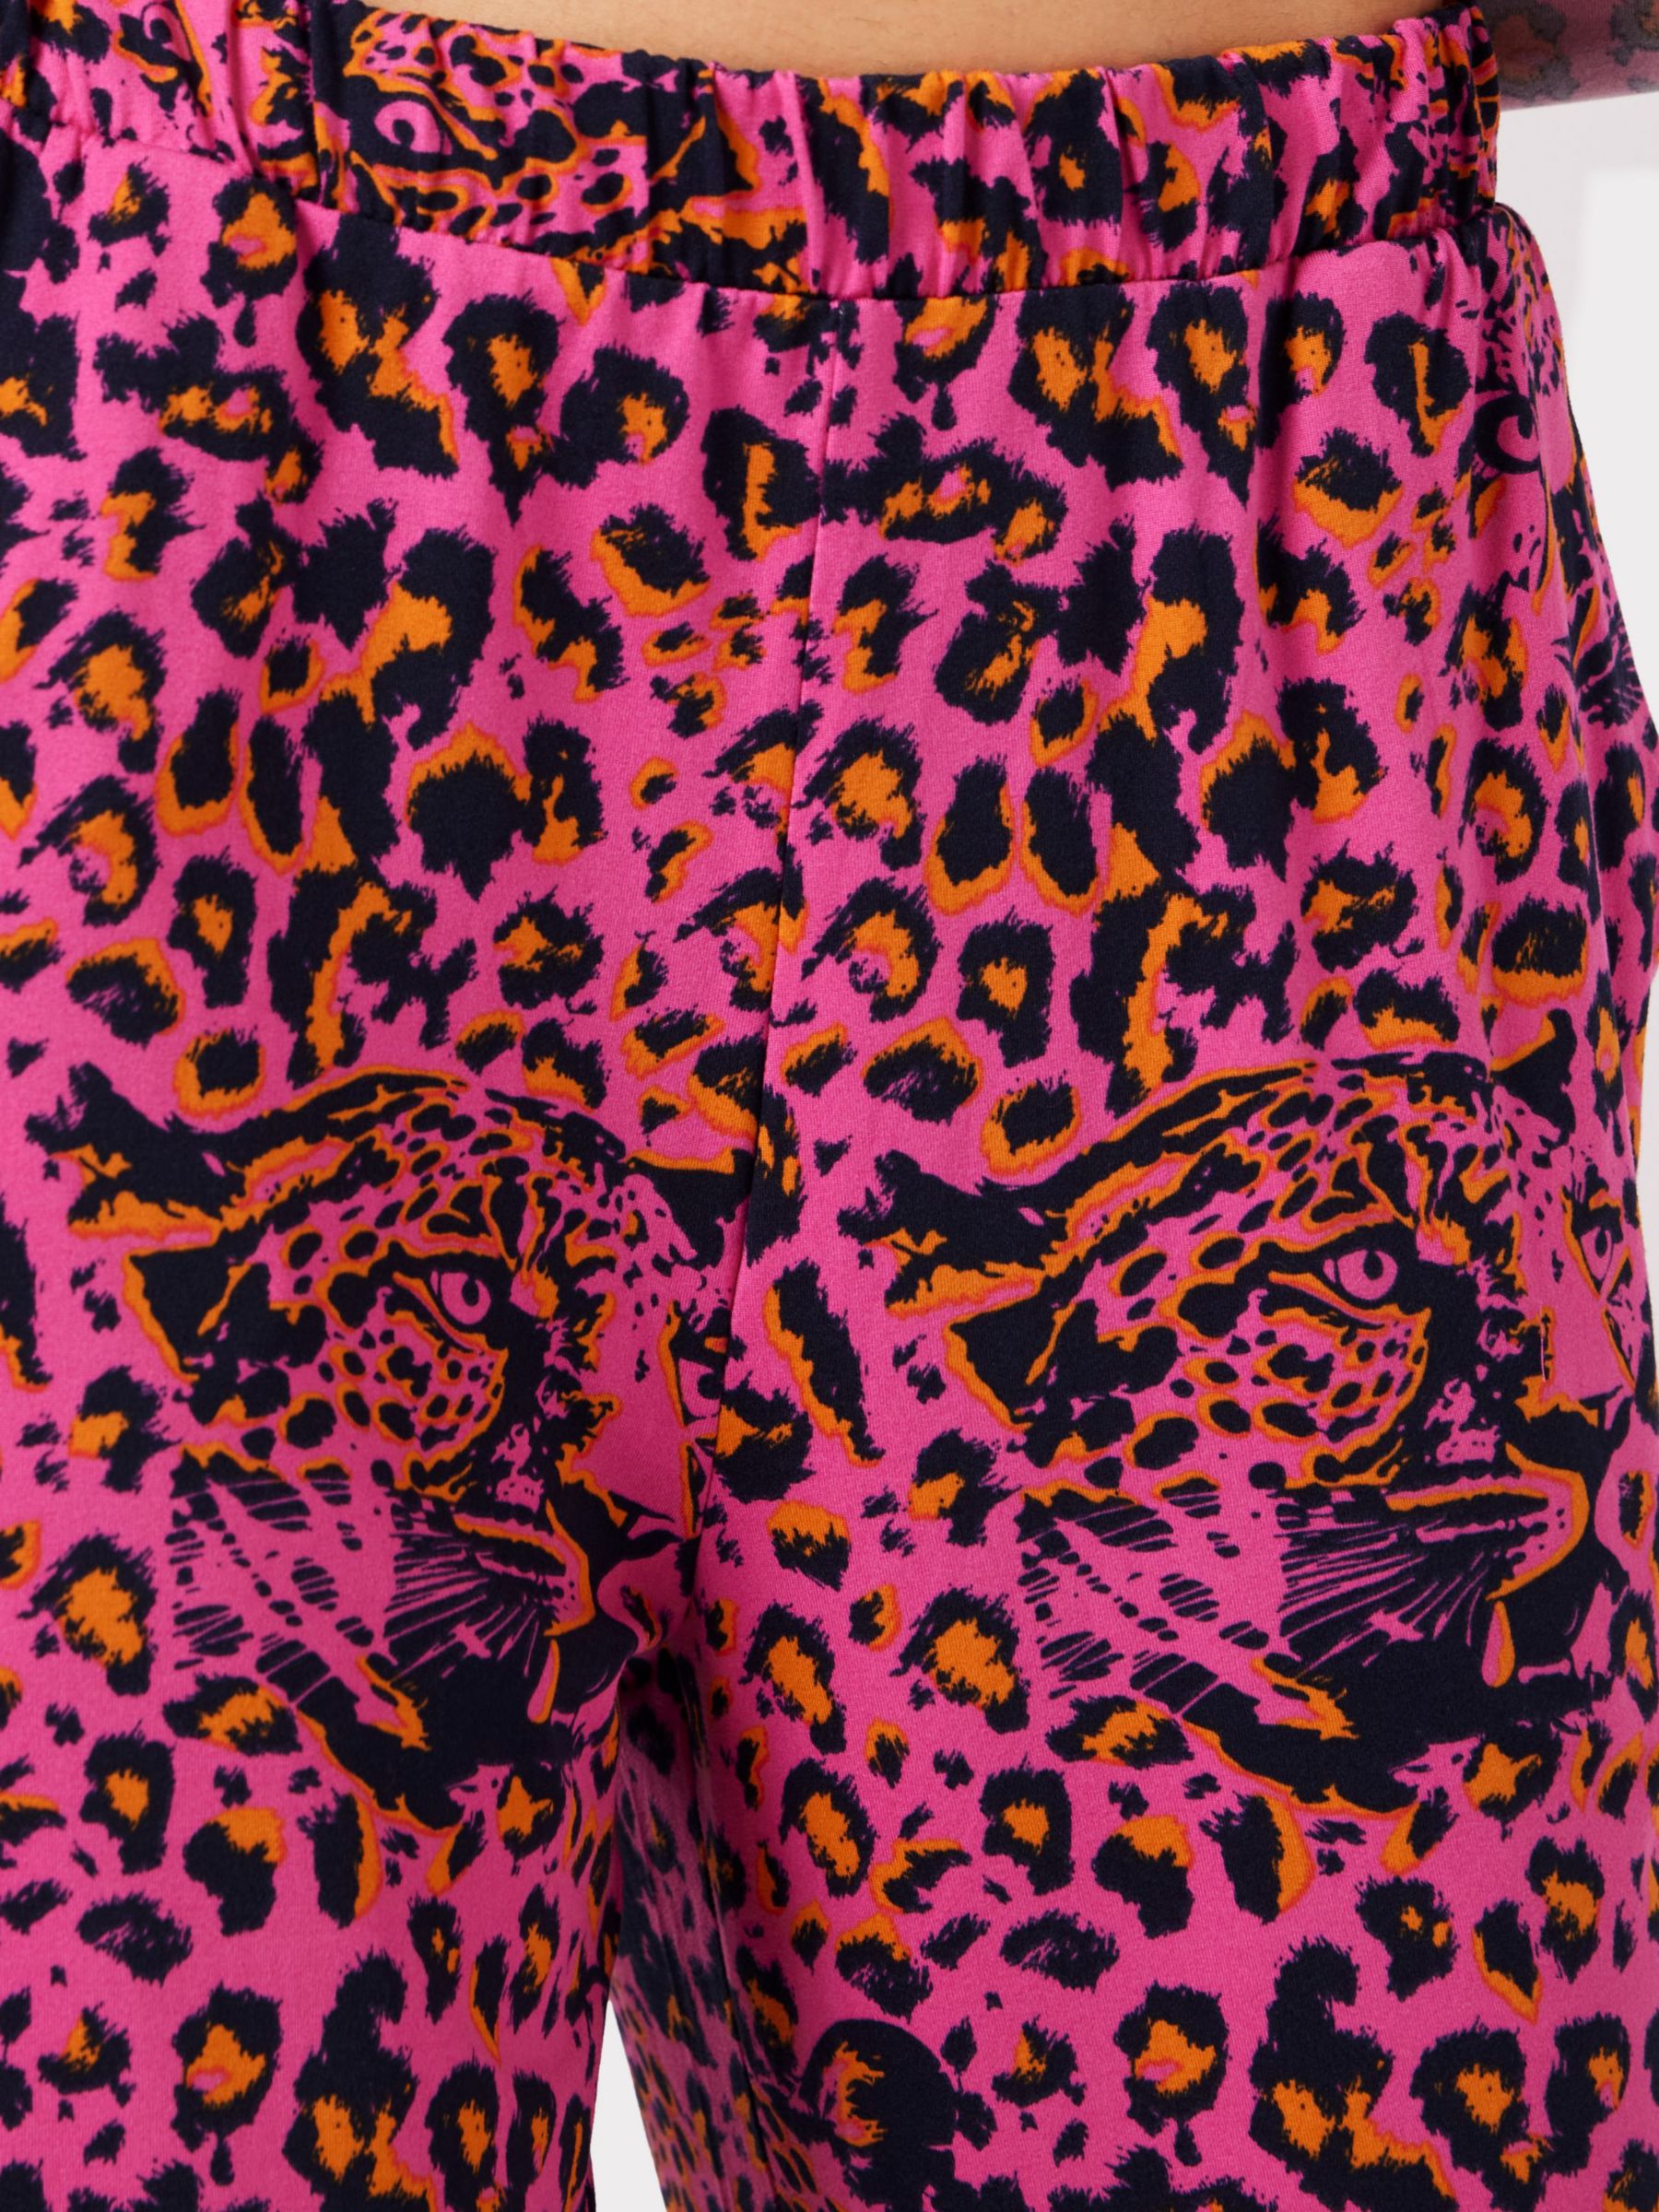 Chelsea Peers Leopard Print Pyjama Set, Pink/Multi at John Lewis & Partners